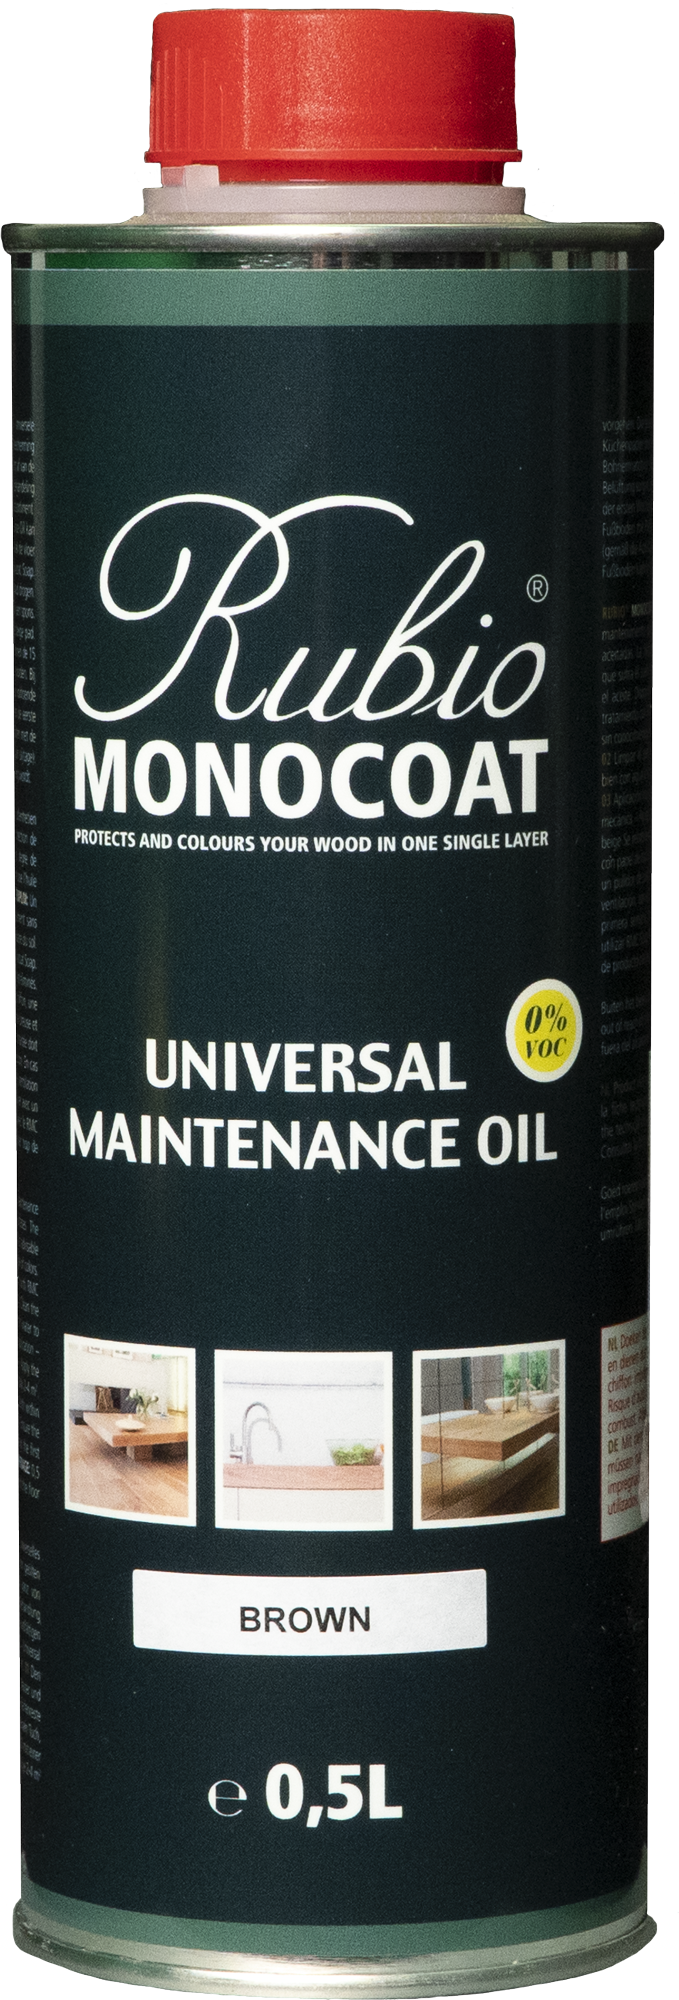 Universal Maintenance Oil - 0.5 Liter